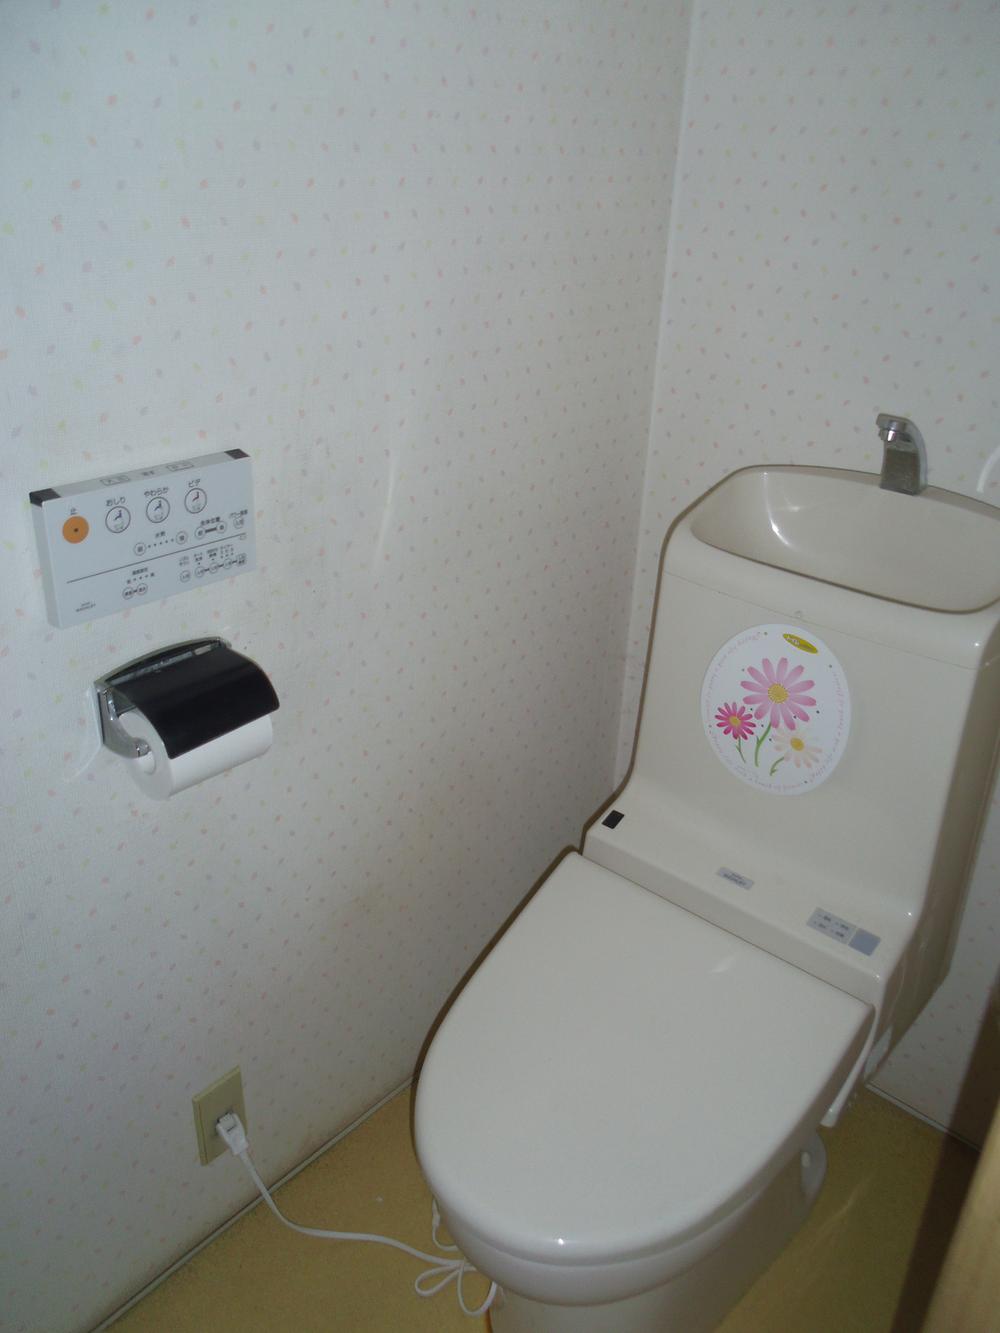 Toilet. (2013 November shooting)